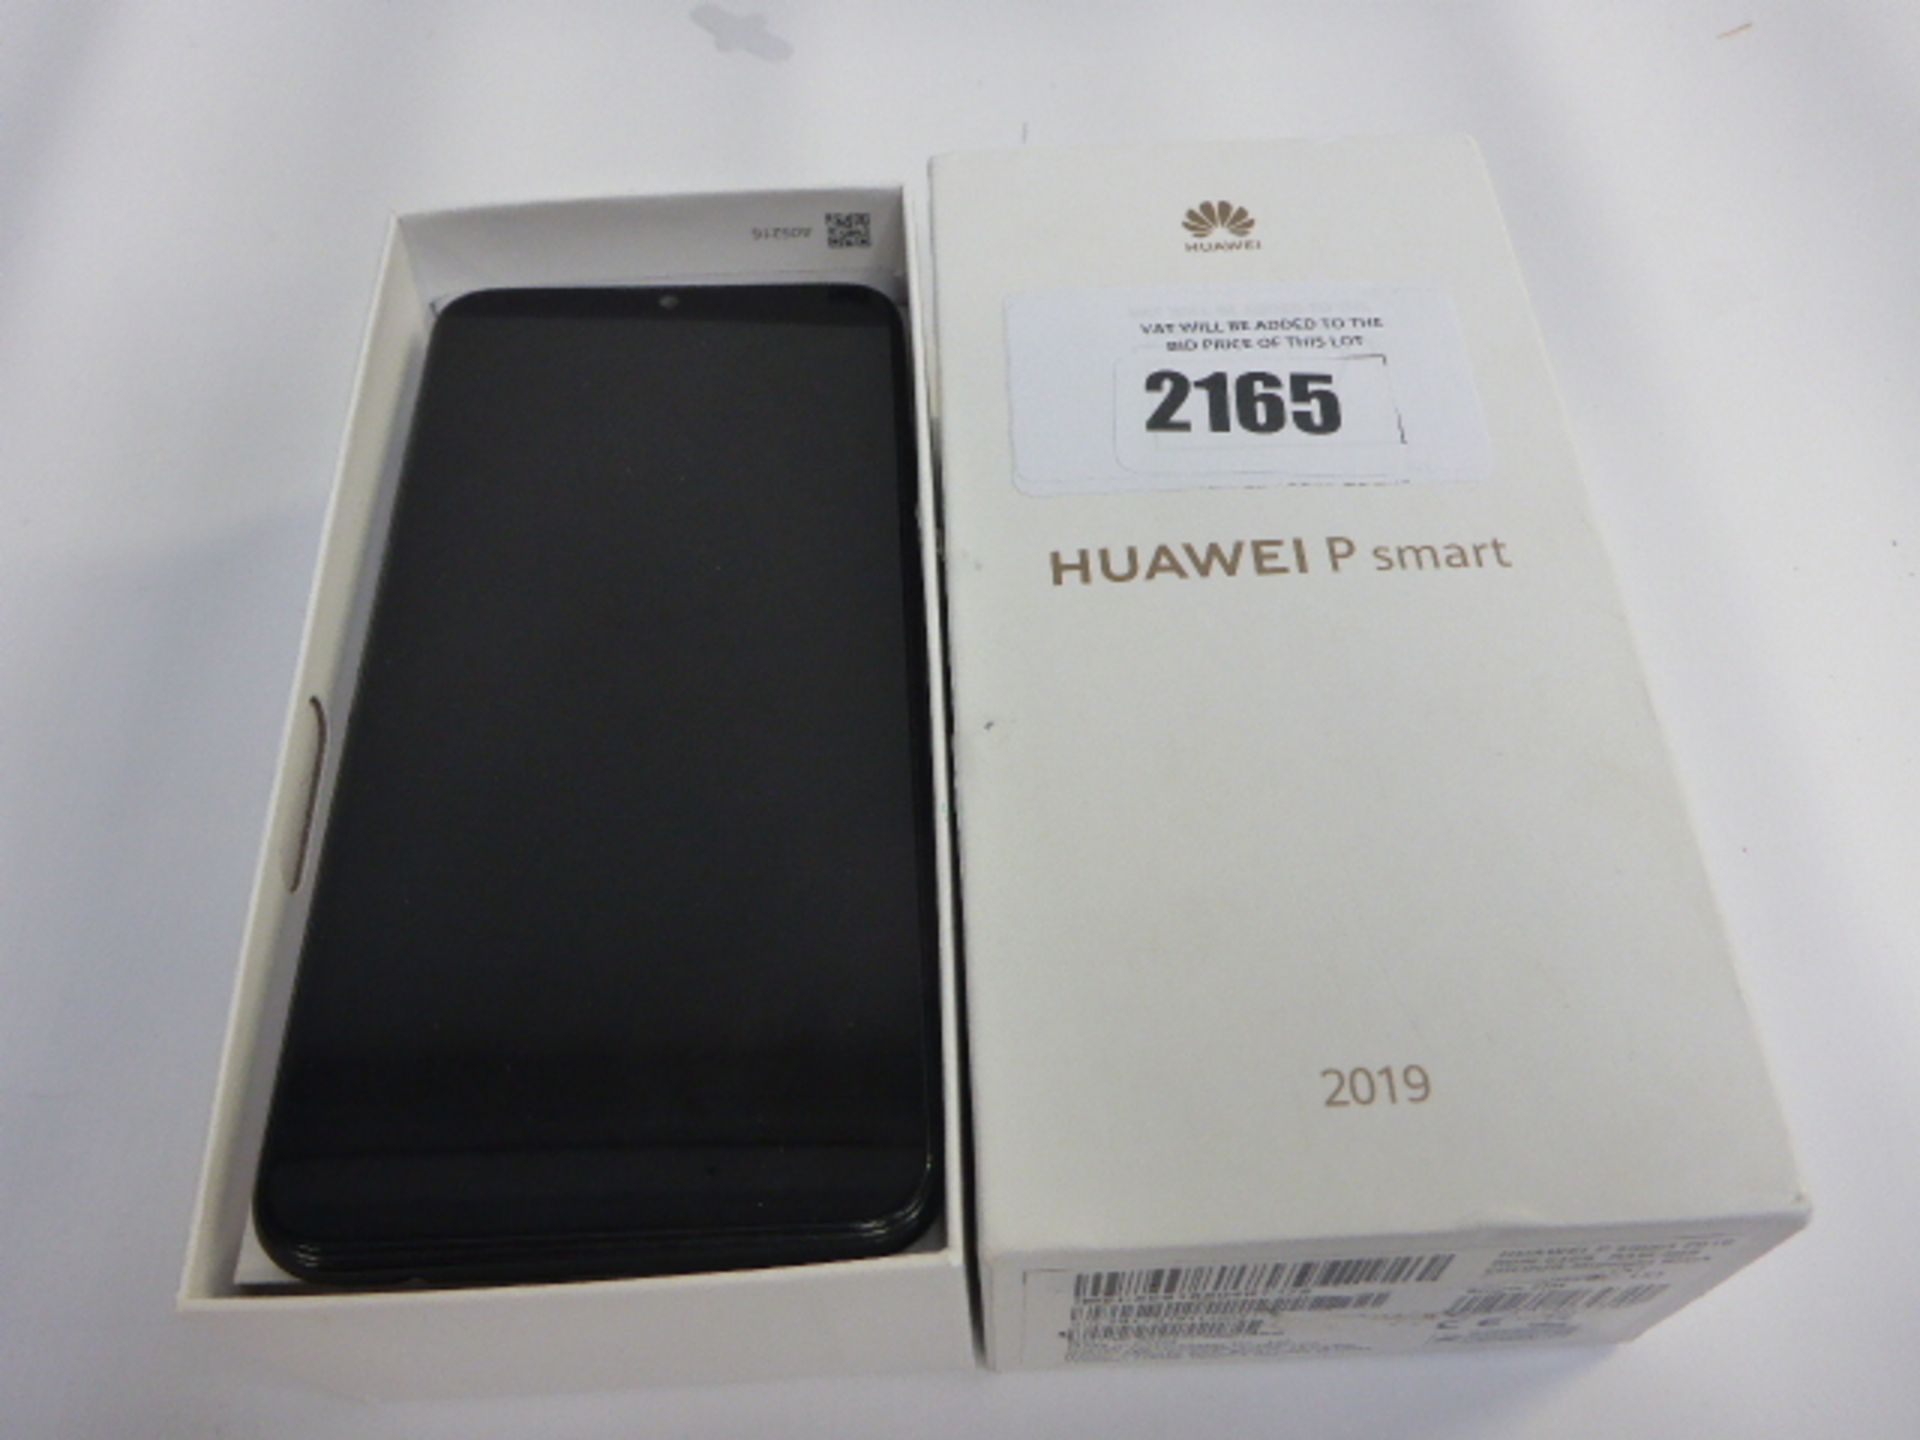 Huawei P Smart 64GB smarthpone in box